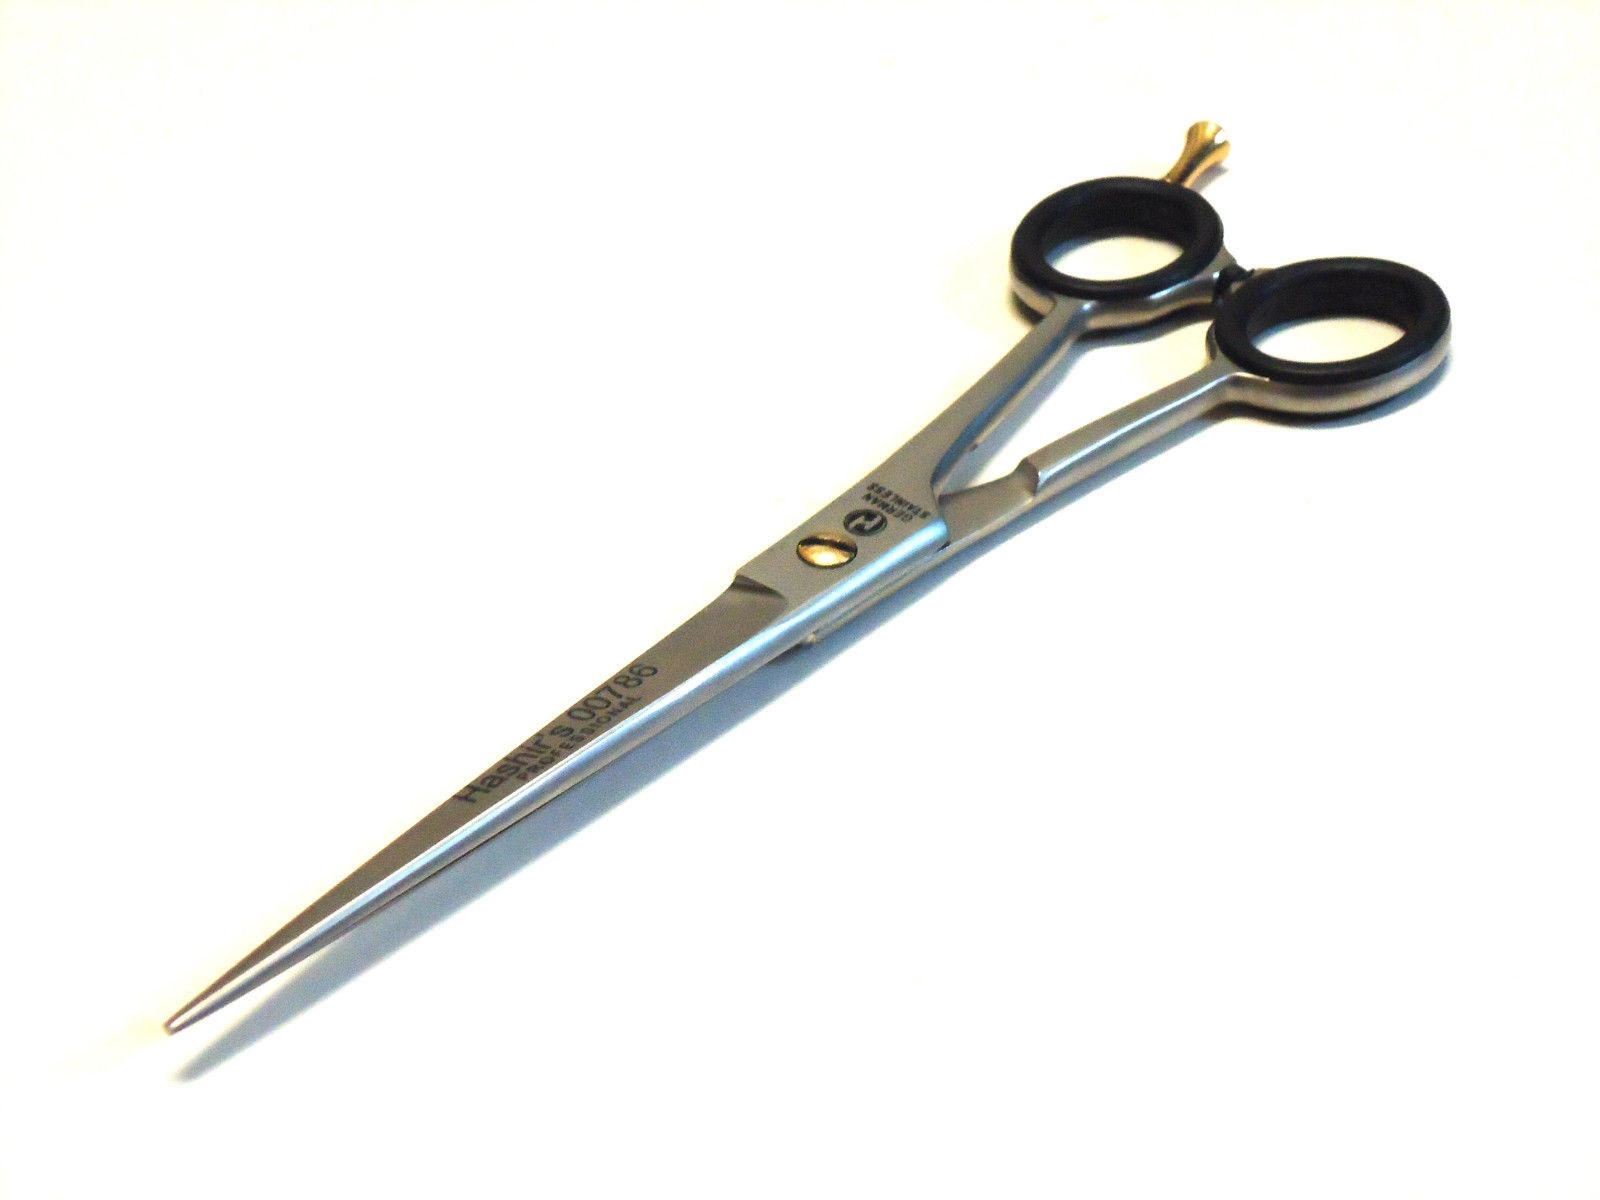 Professional HASHIR Professional 8 Big Super Sharp Shears Scissors  Stainless